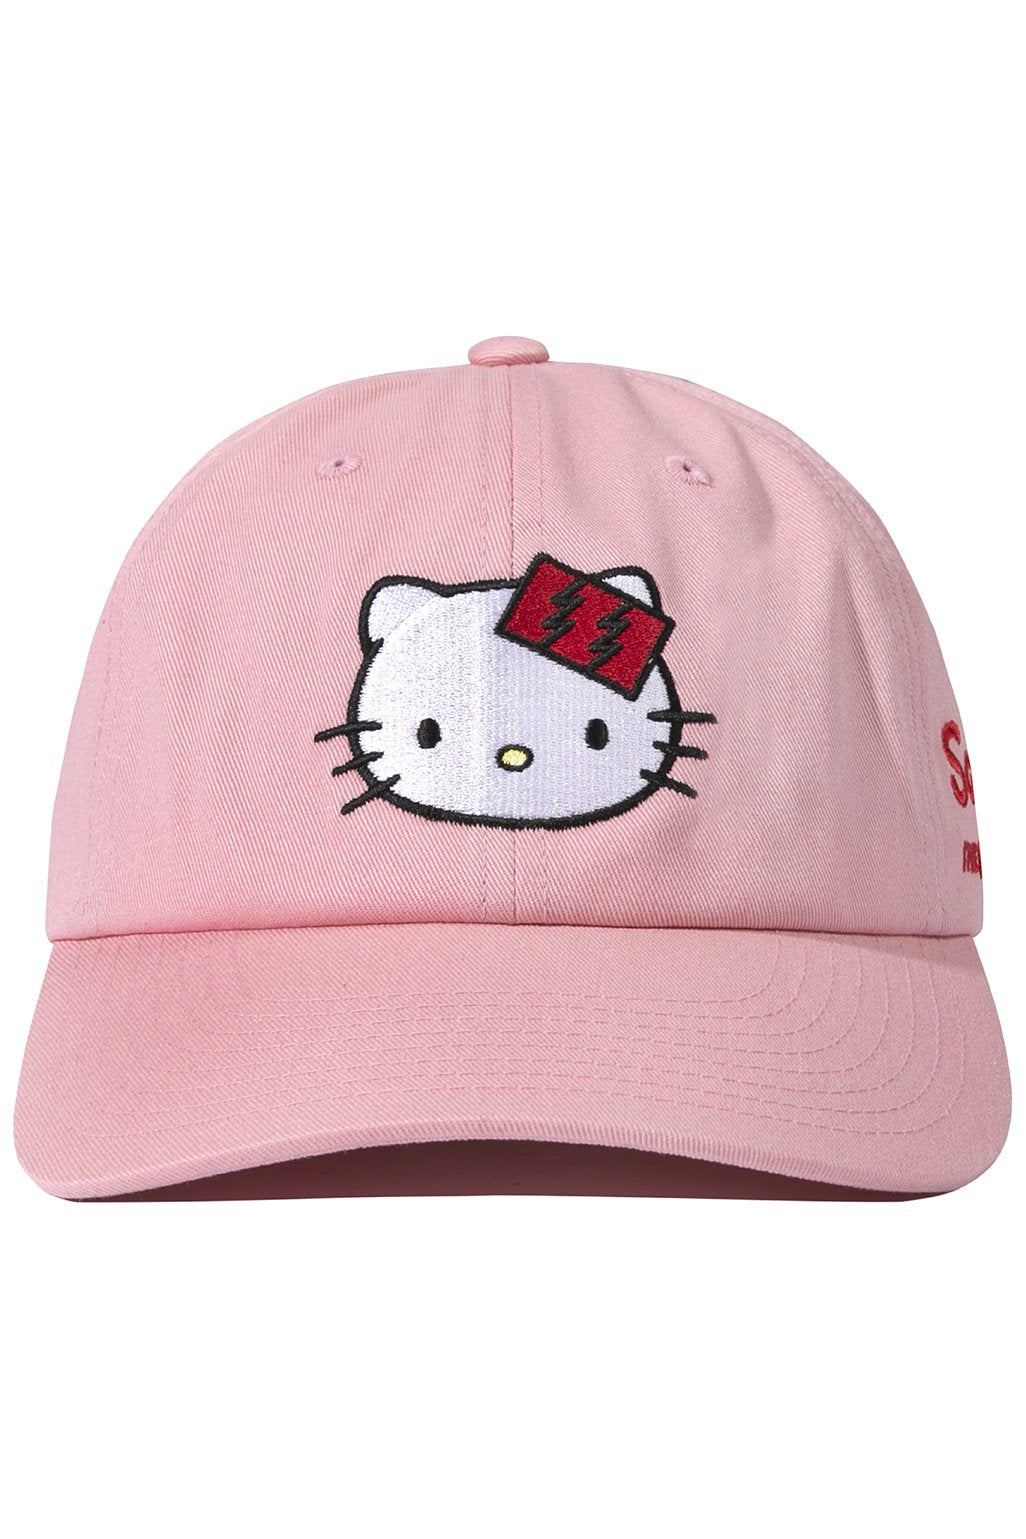 converse hello kitty hat